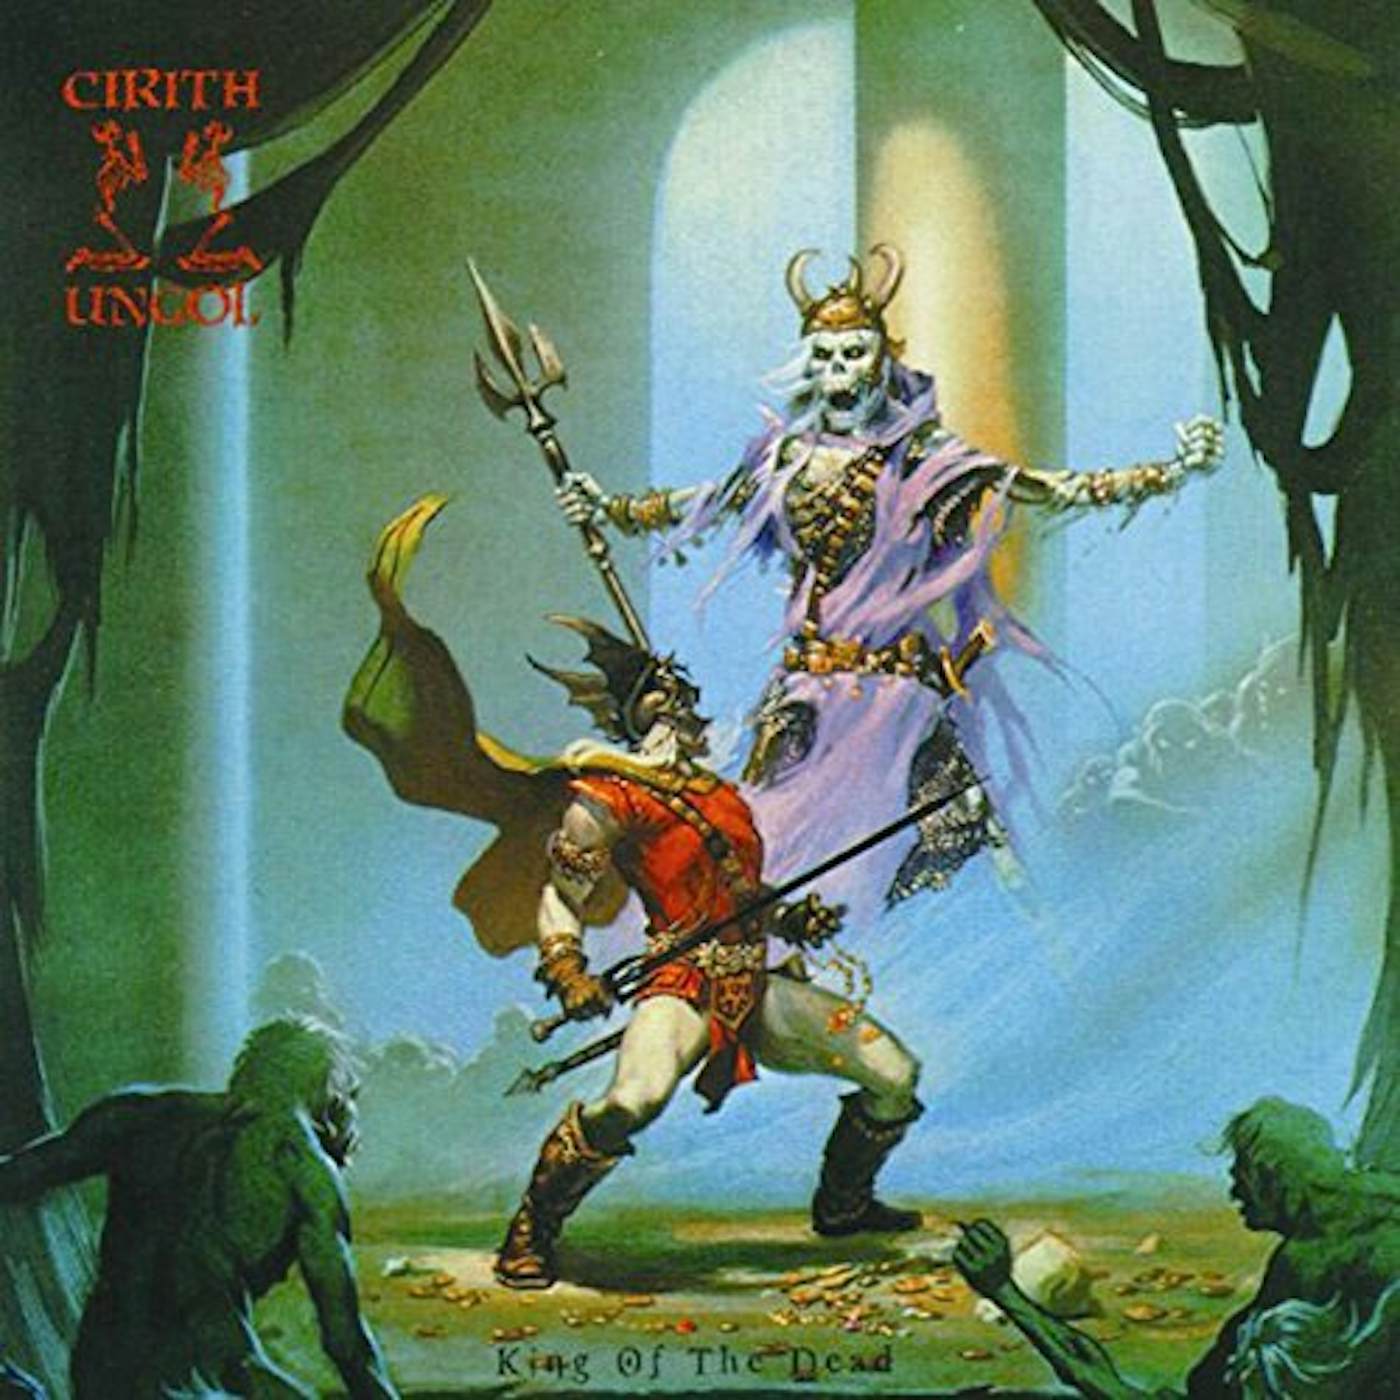 Cirith Ungol King of the Dead Vinyl Record